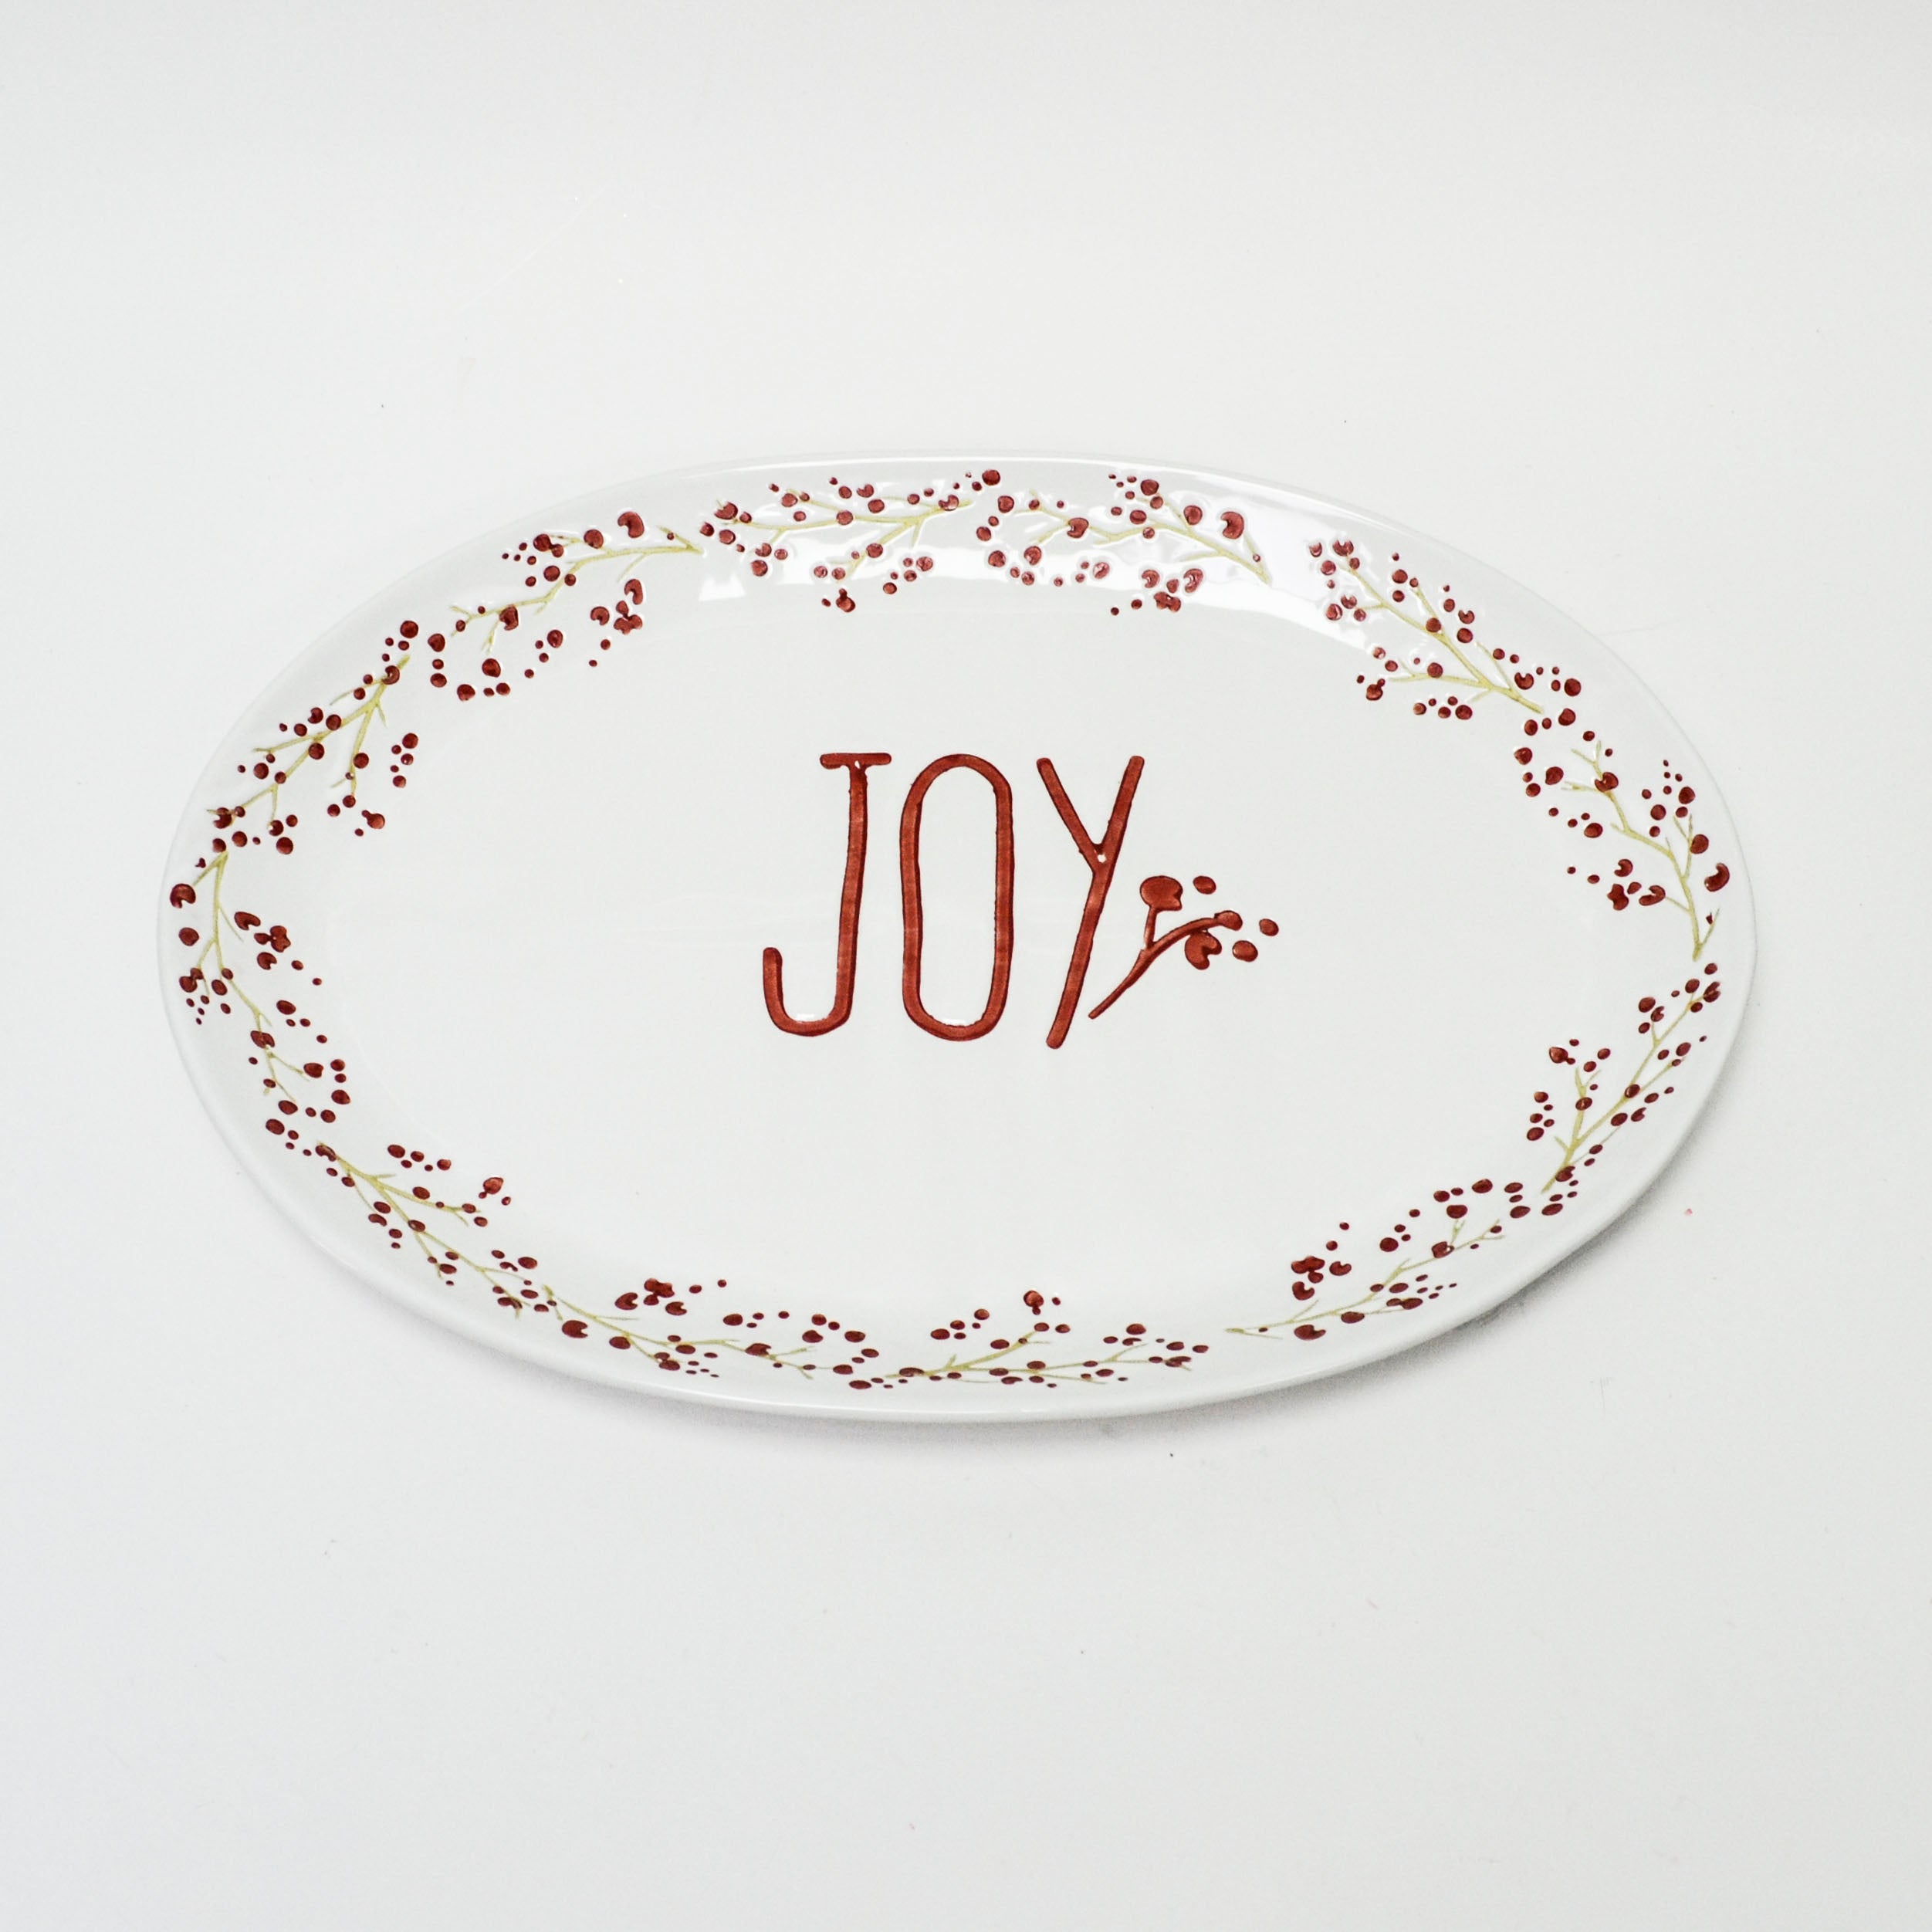 Platou ceramica Joy